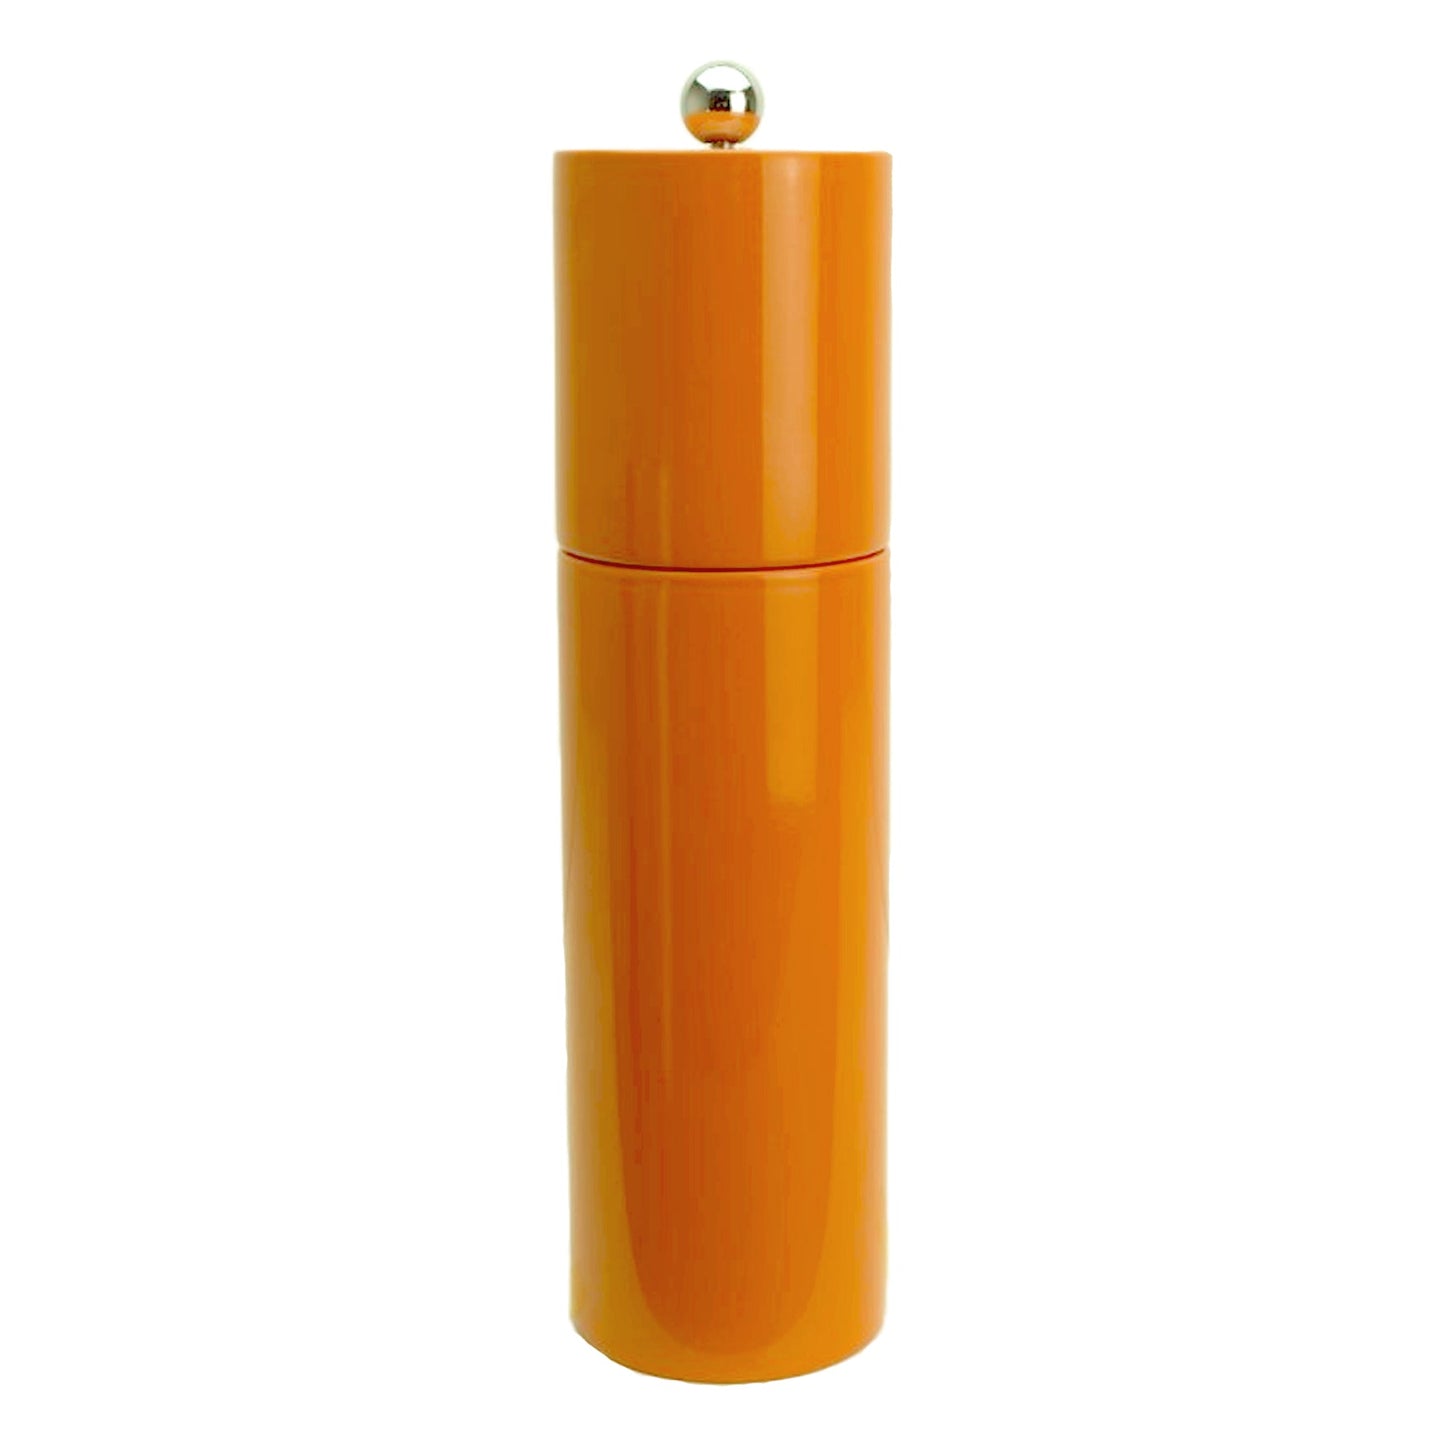 Orange Round Column Salt or Pepper Mill, lacquered, medium size - Addison Ross UK